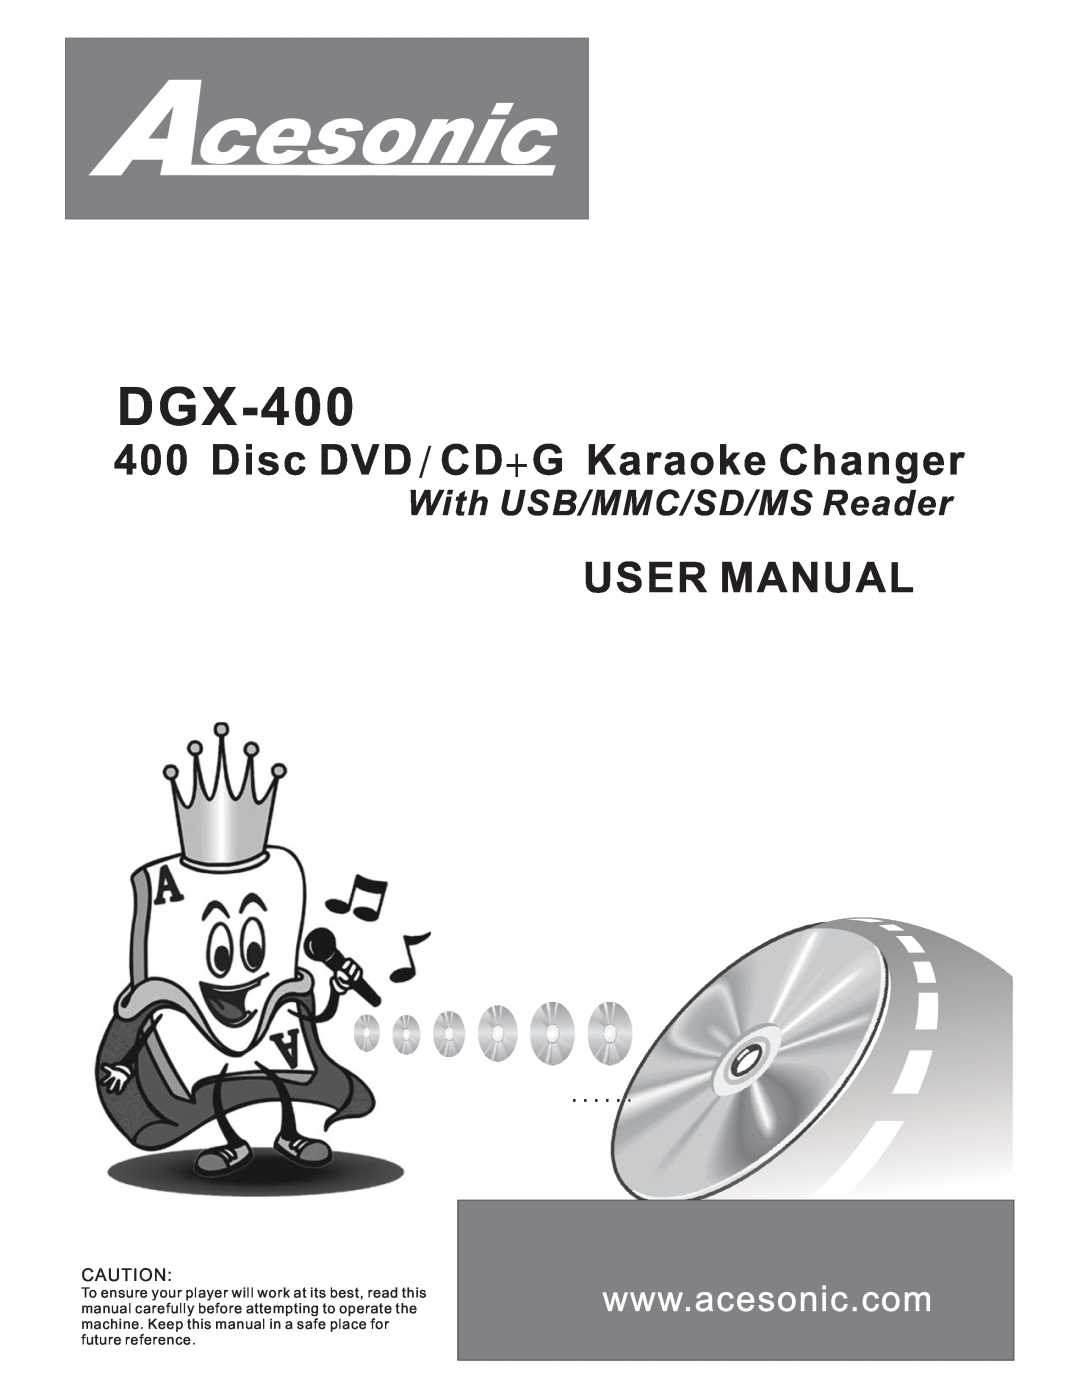 Acesonic DGX-400 user manual Disc DVD/CD+G Karaoke Changer, User Manual, With USB/MMC/SD/MS Reader 